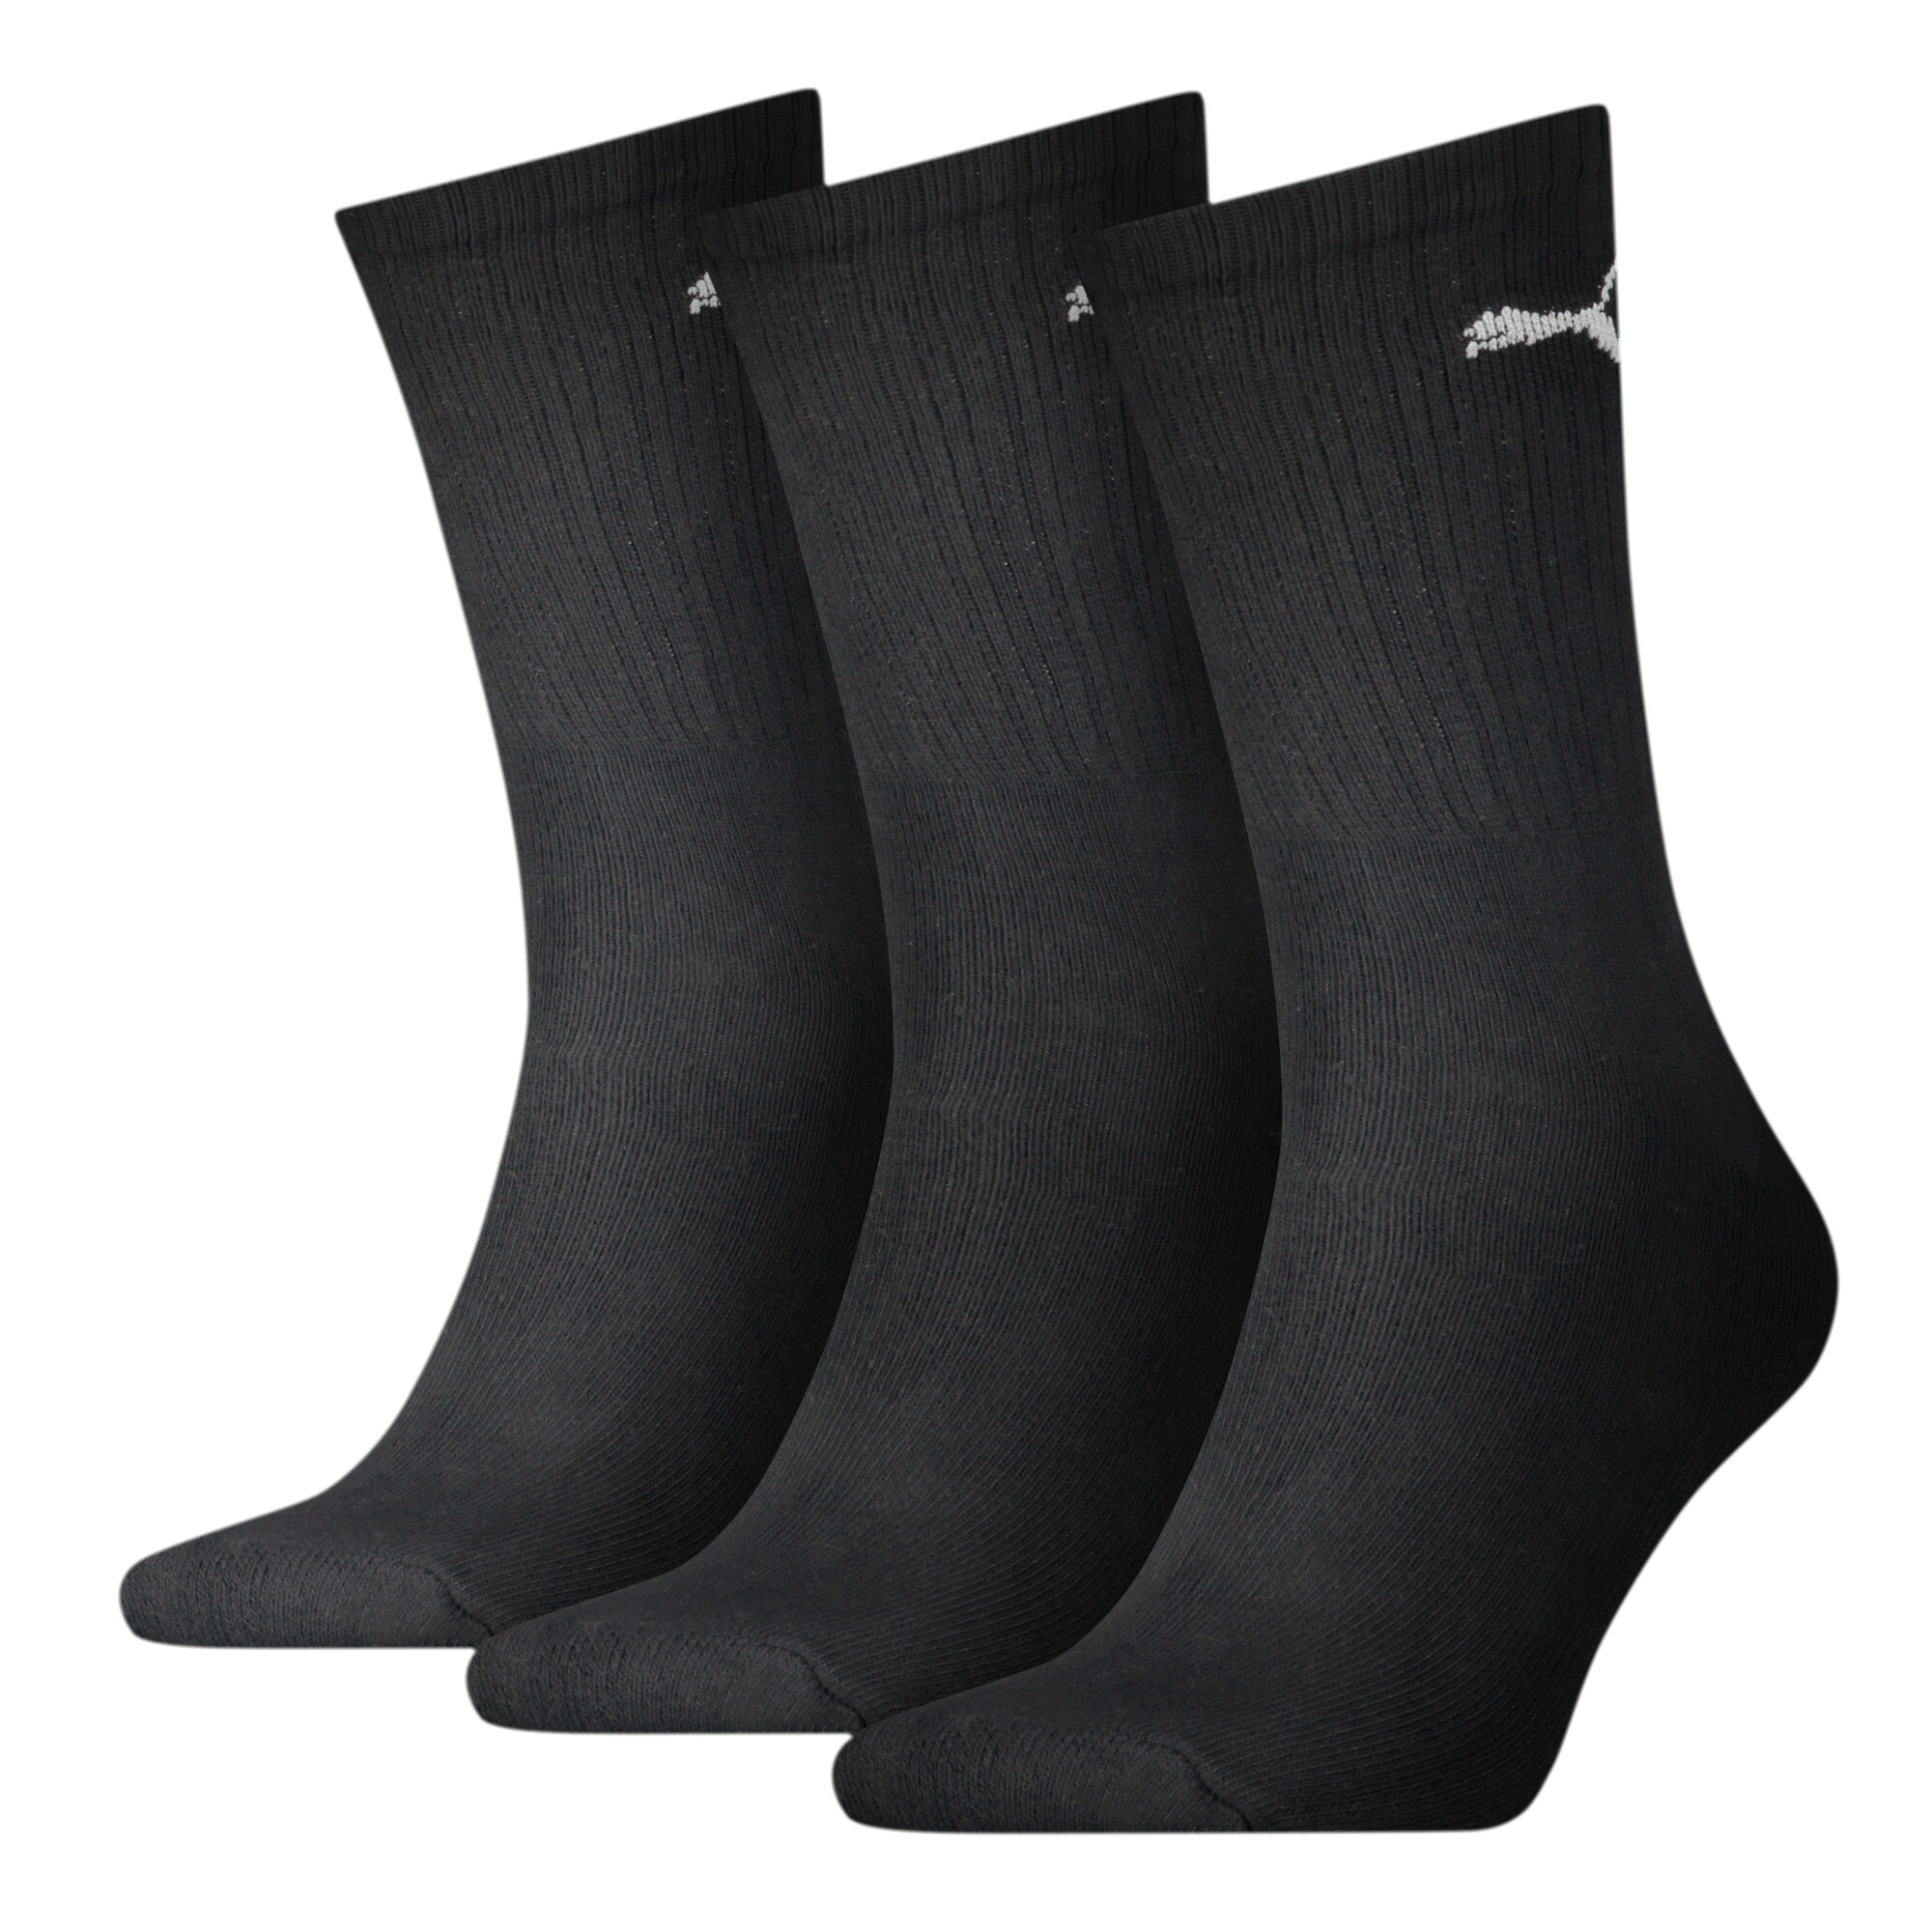 Puma Unisex Sport Crew Shirt Lightweight Socks 3 Pack, Black, Size 43-46, Clothing